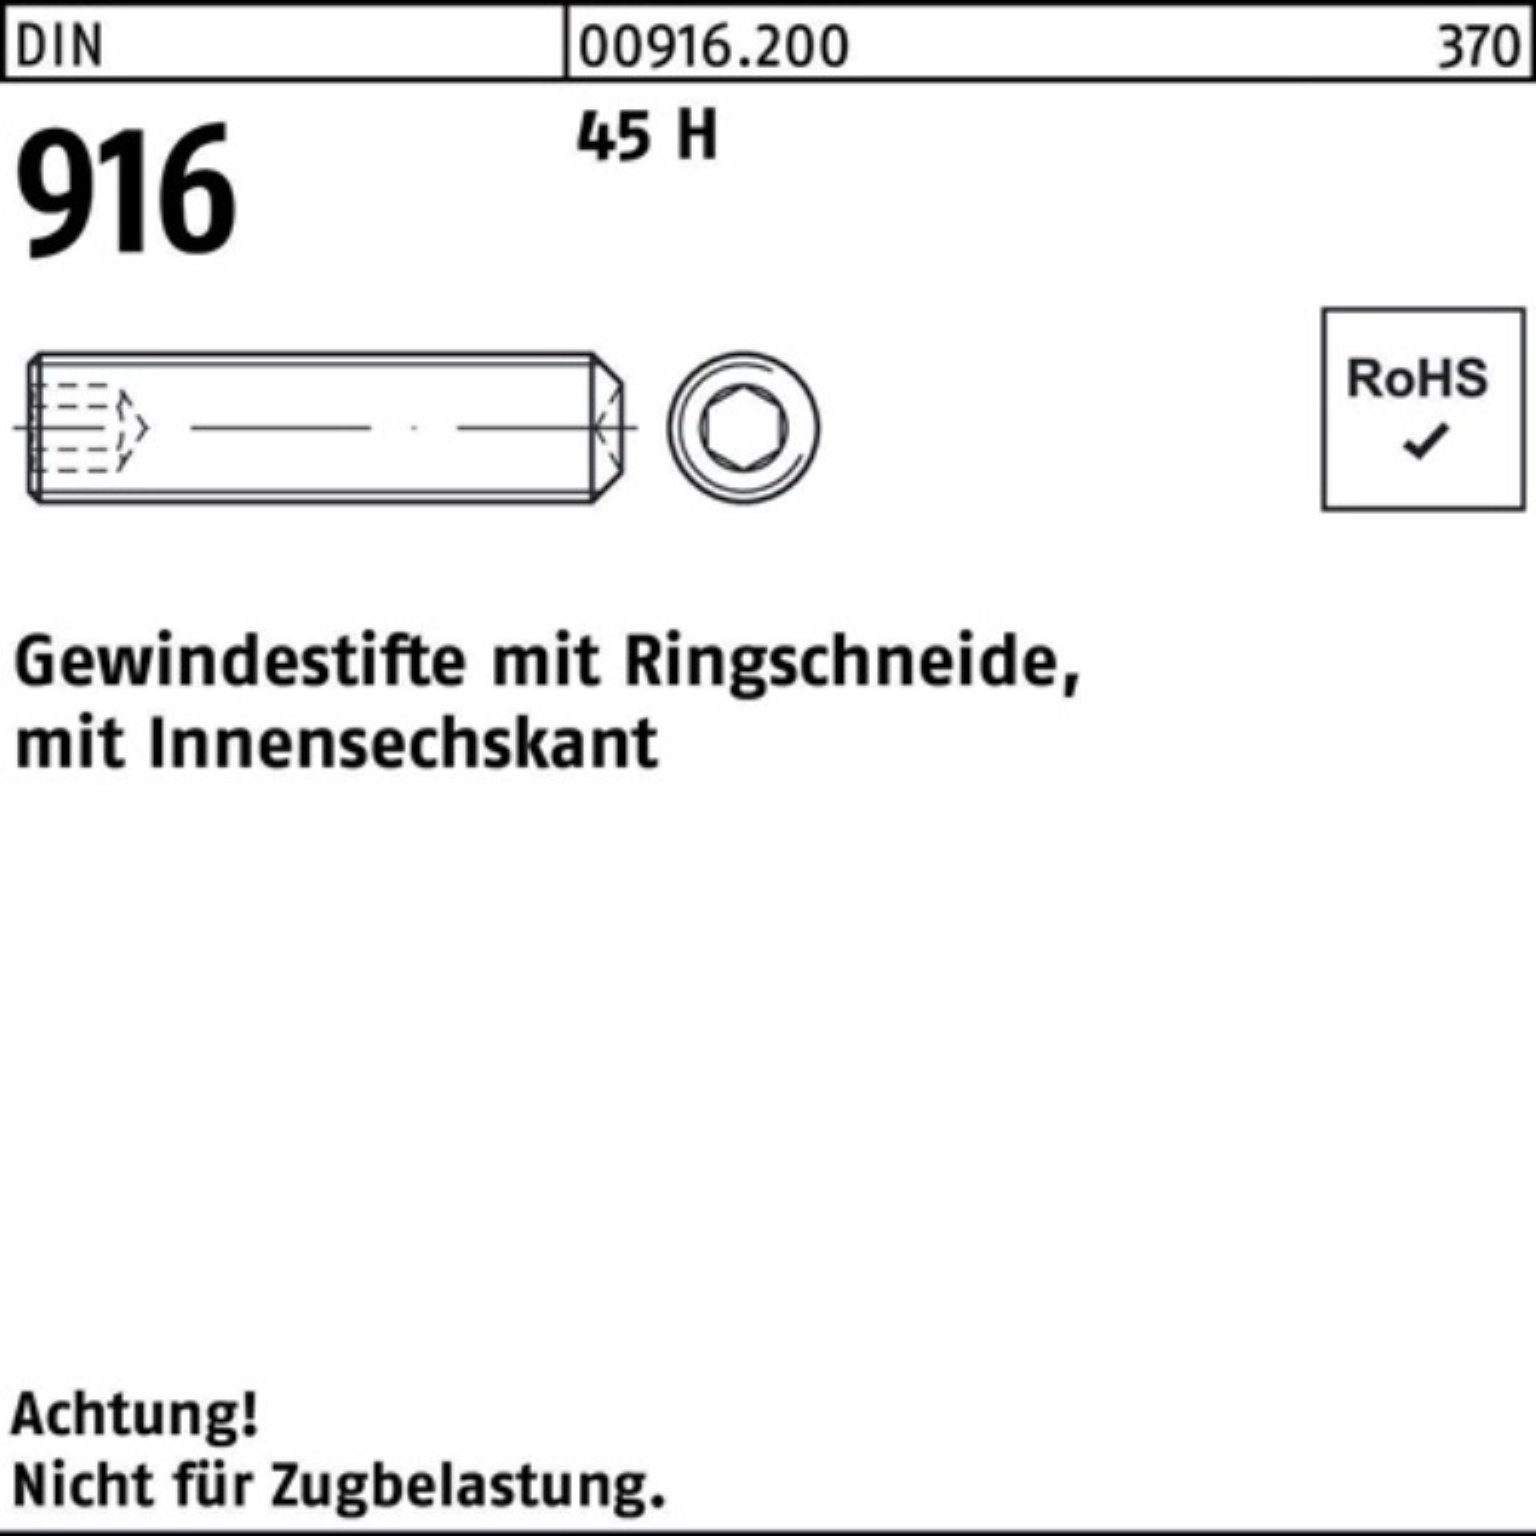 M4x 200 St DIN Gewindebolzen 30 Pack Reyher Ringschn./Innen-6kt Gewindestift 916 200er 45 H